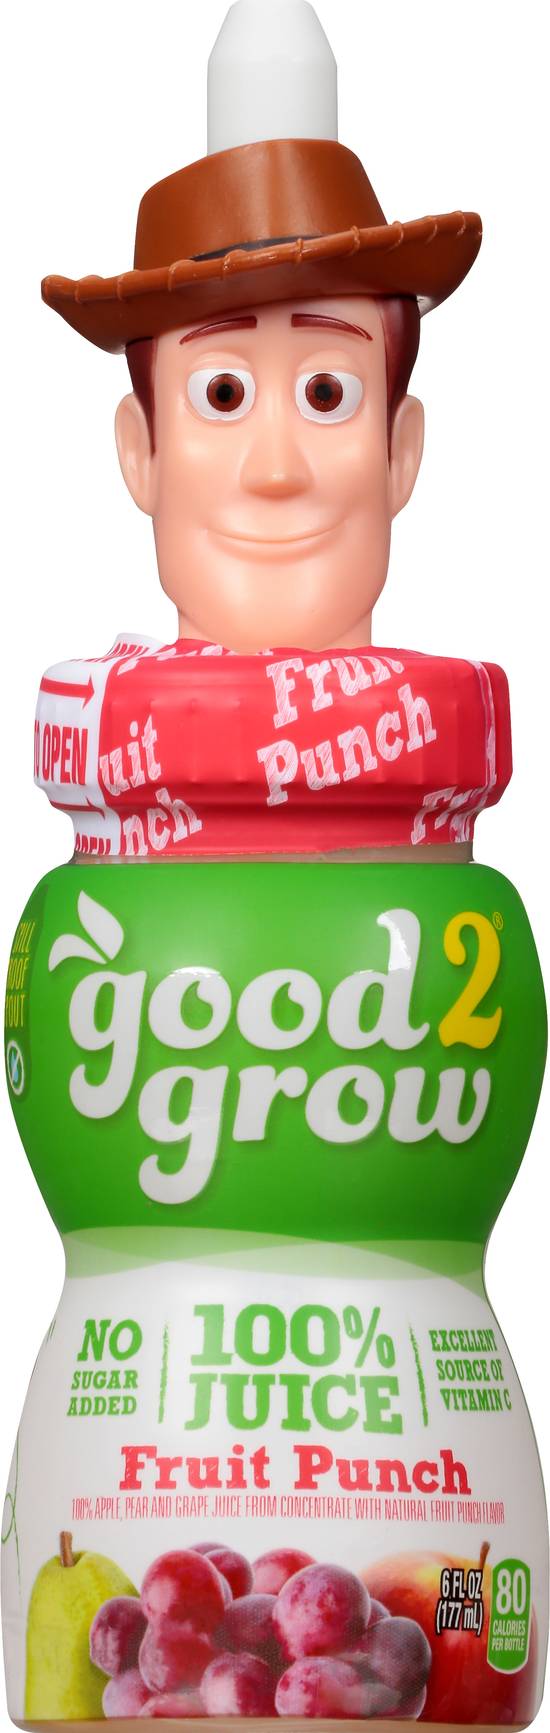 Good2grow Fruit Punch 100% Juice ( 6 fl oz )